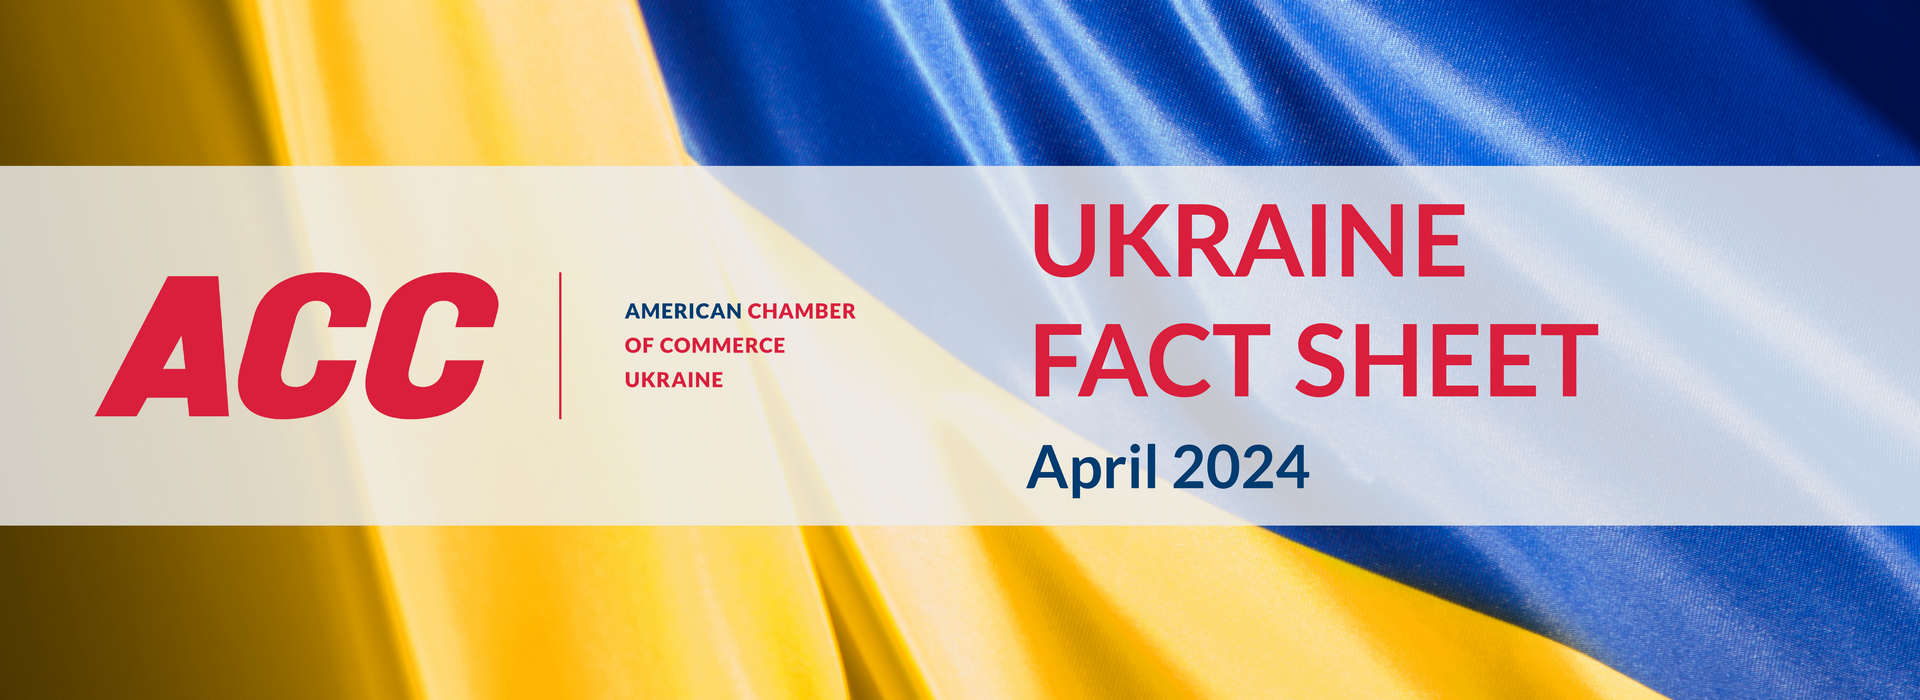 Ukraine Fact Sheet. April 2024